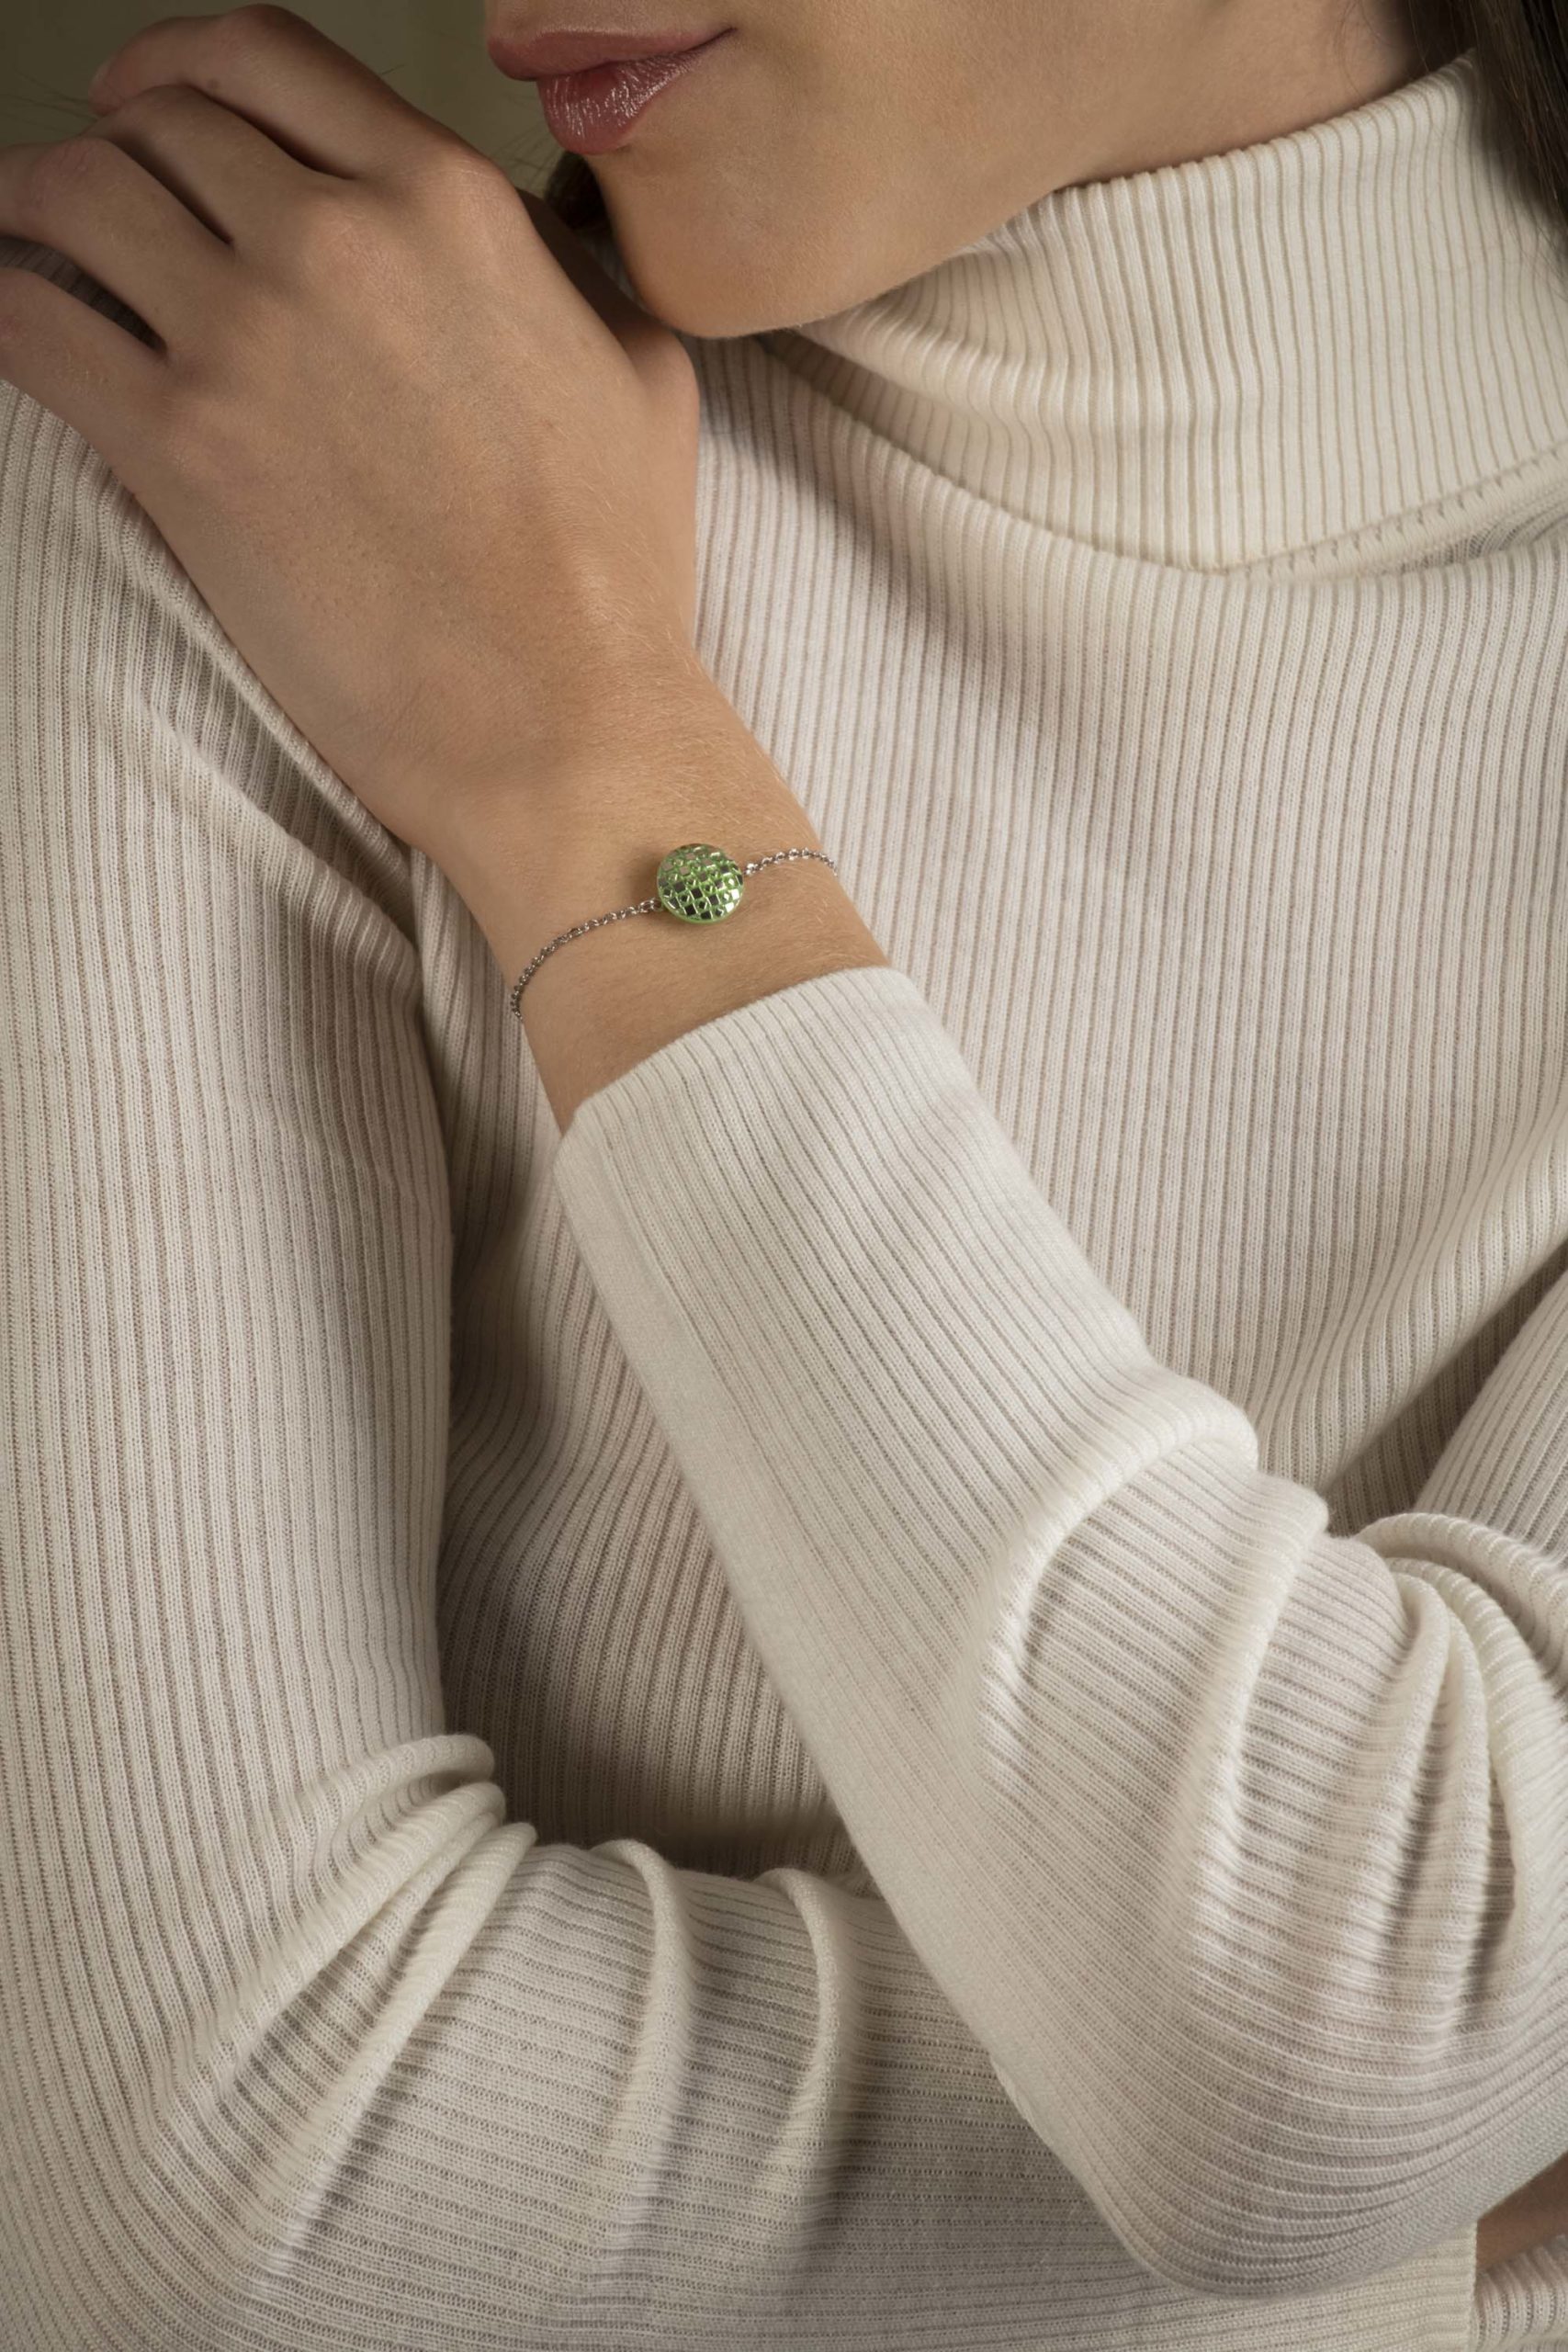 Assuna – Look Bracelet chaîne simple Eugénie vert – bouton ancien 1940